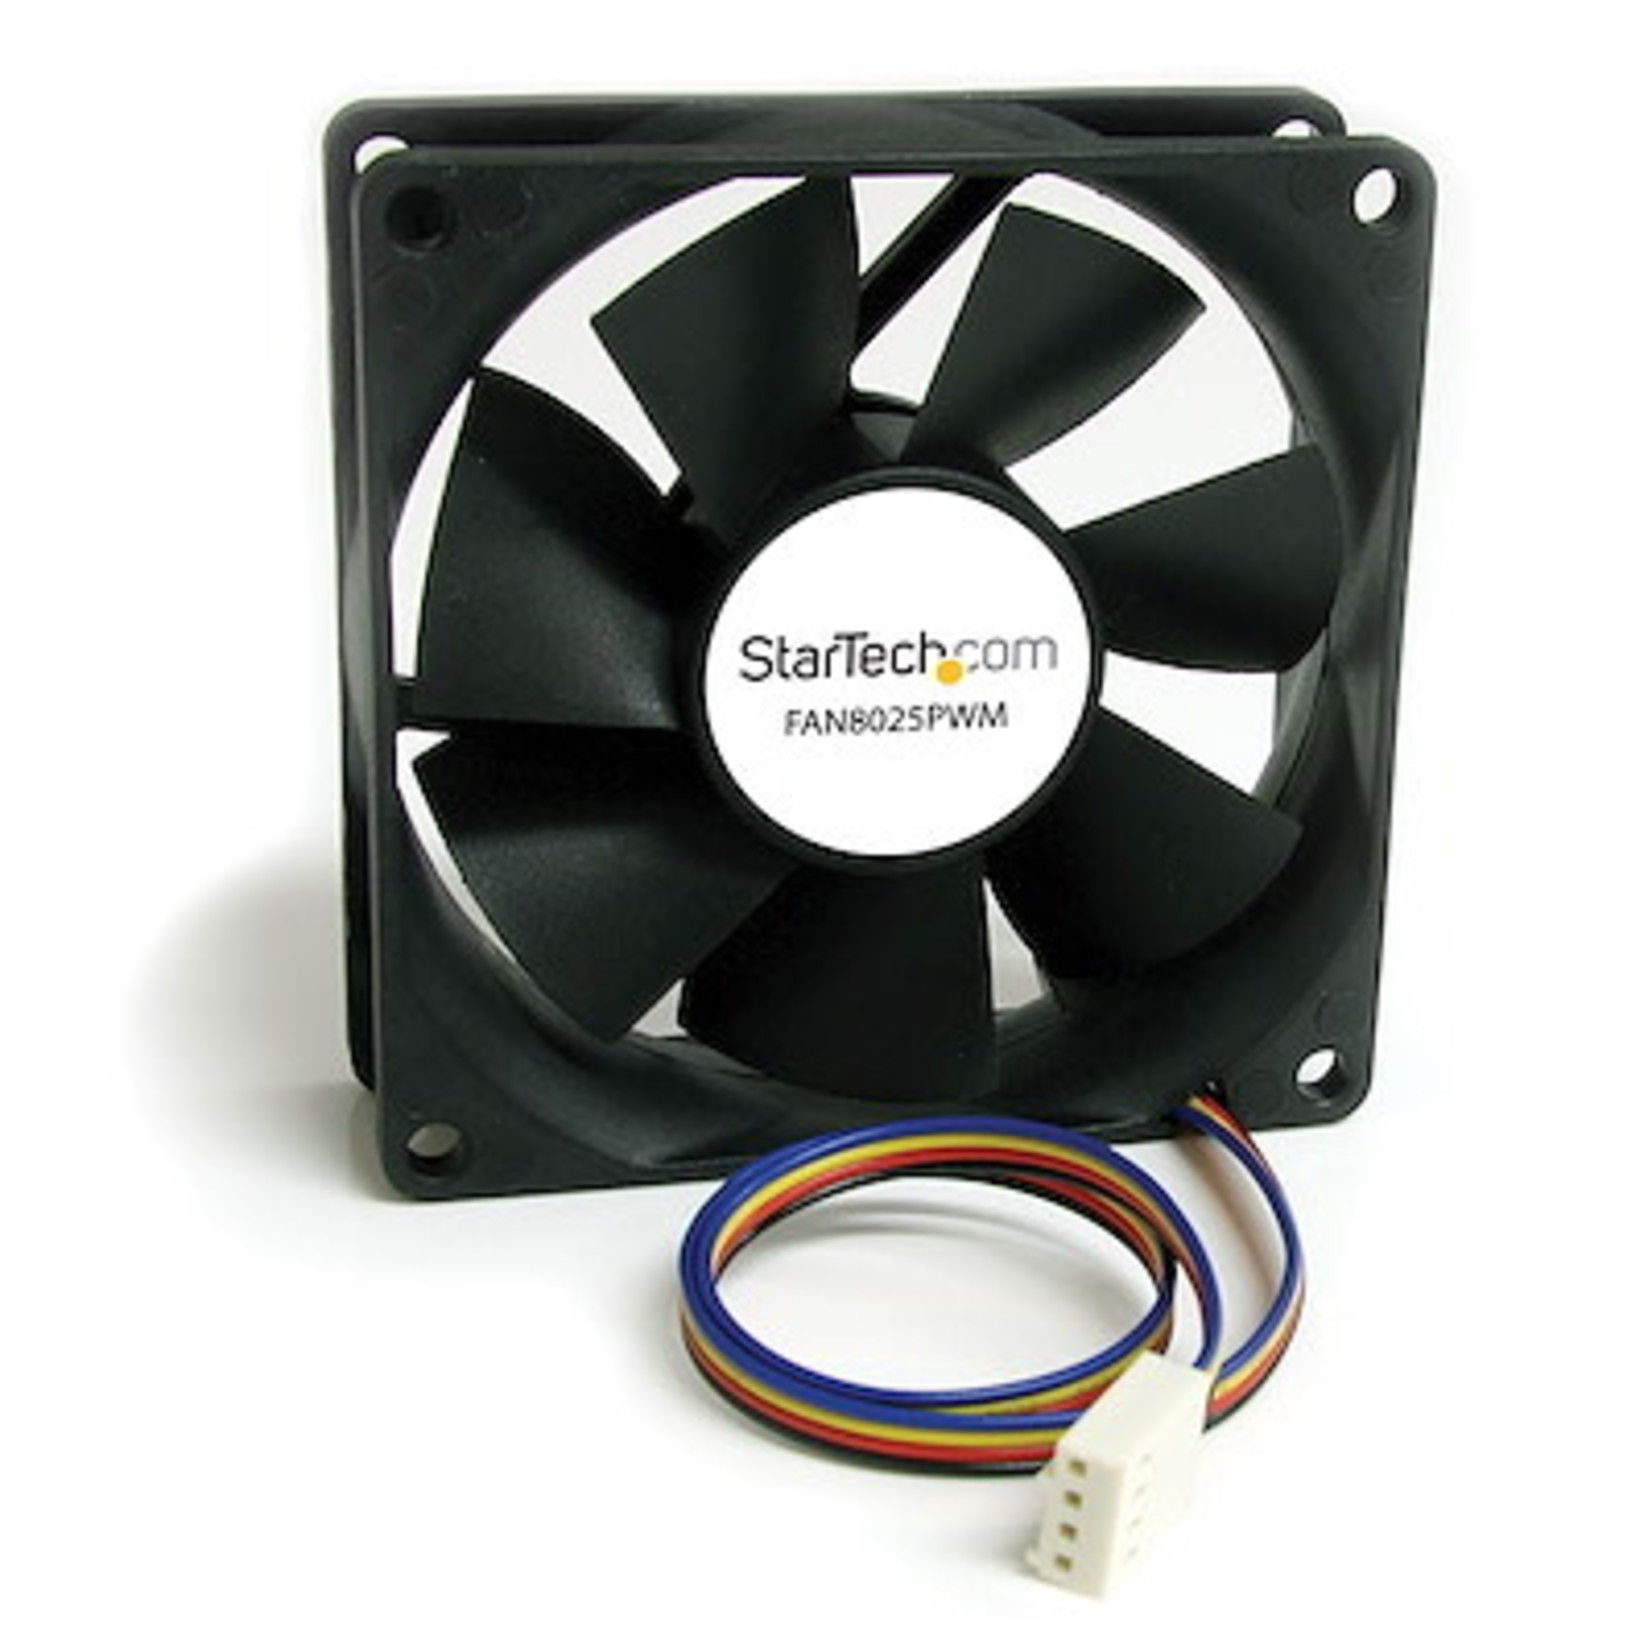 Startech 80x25mm Fan/Pulse Width Modulation